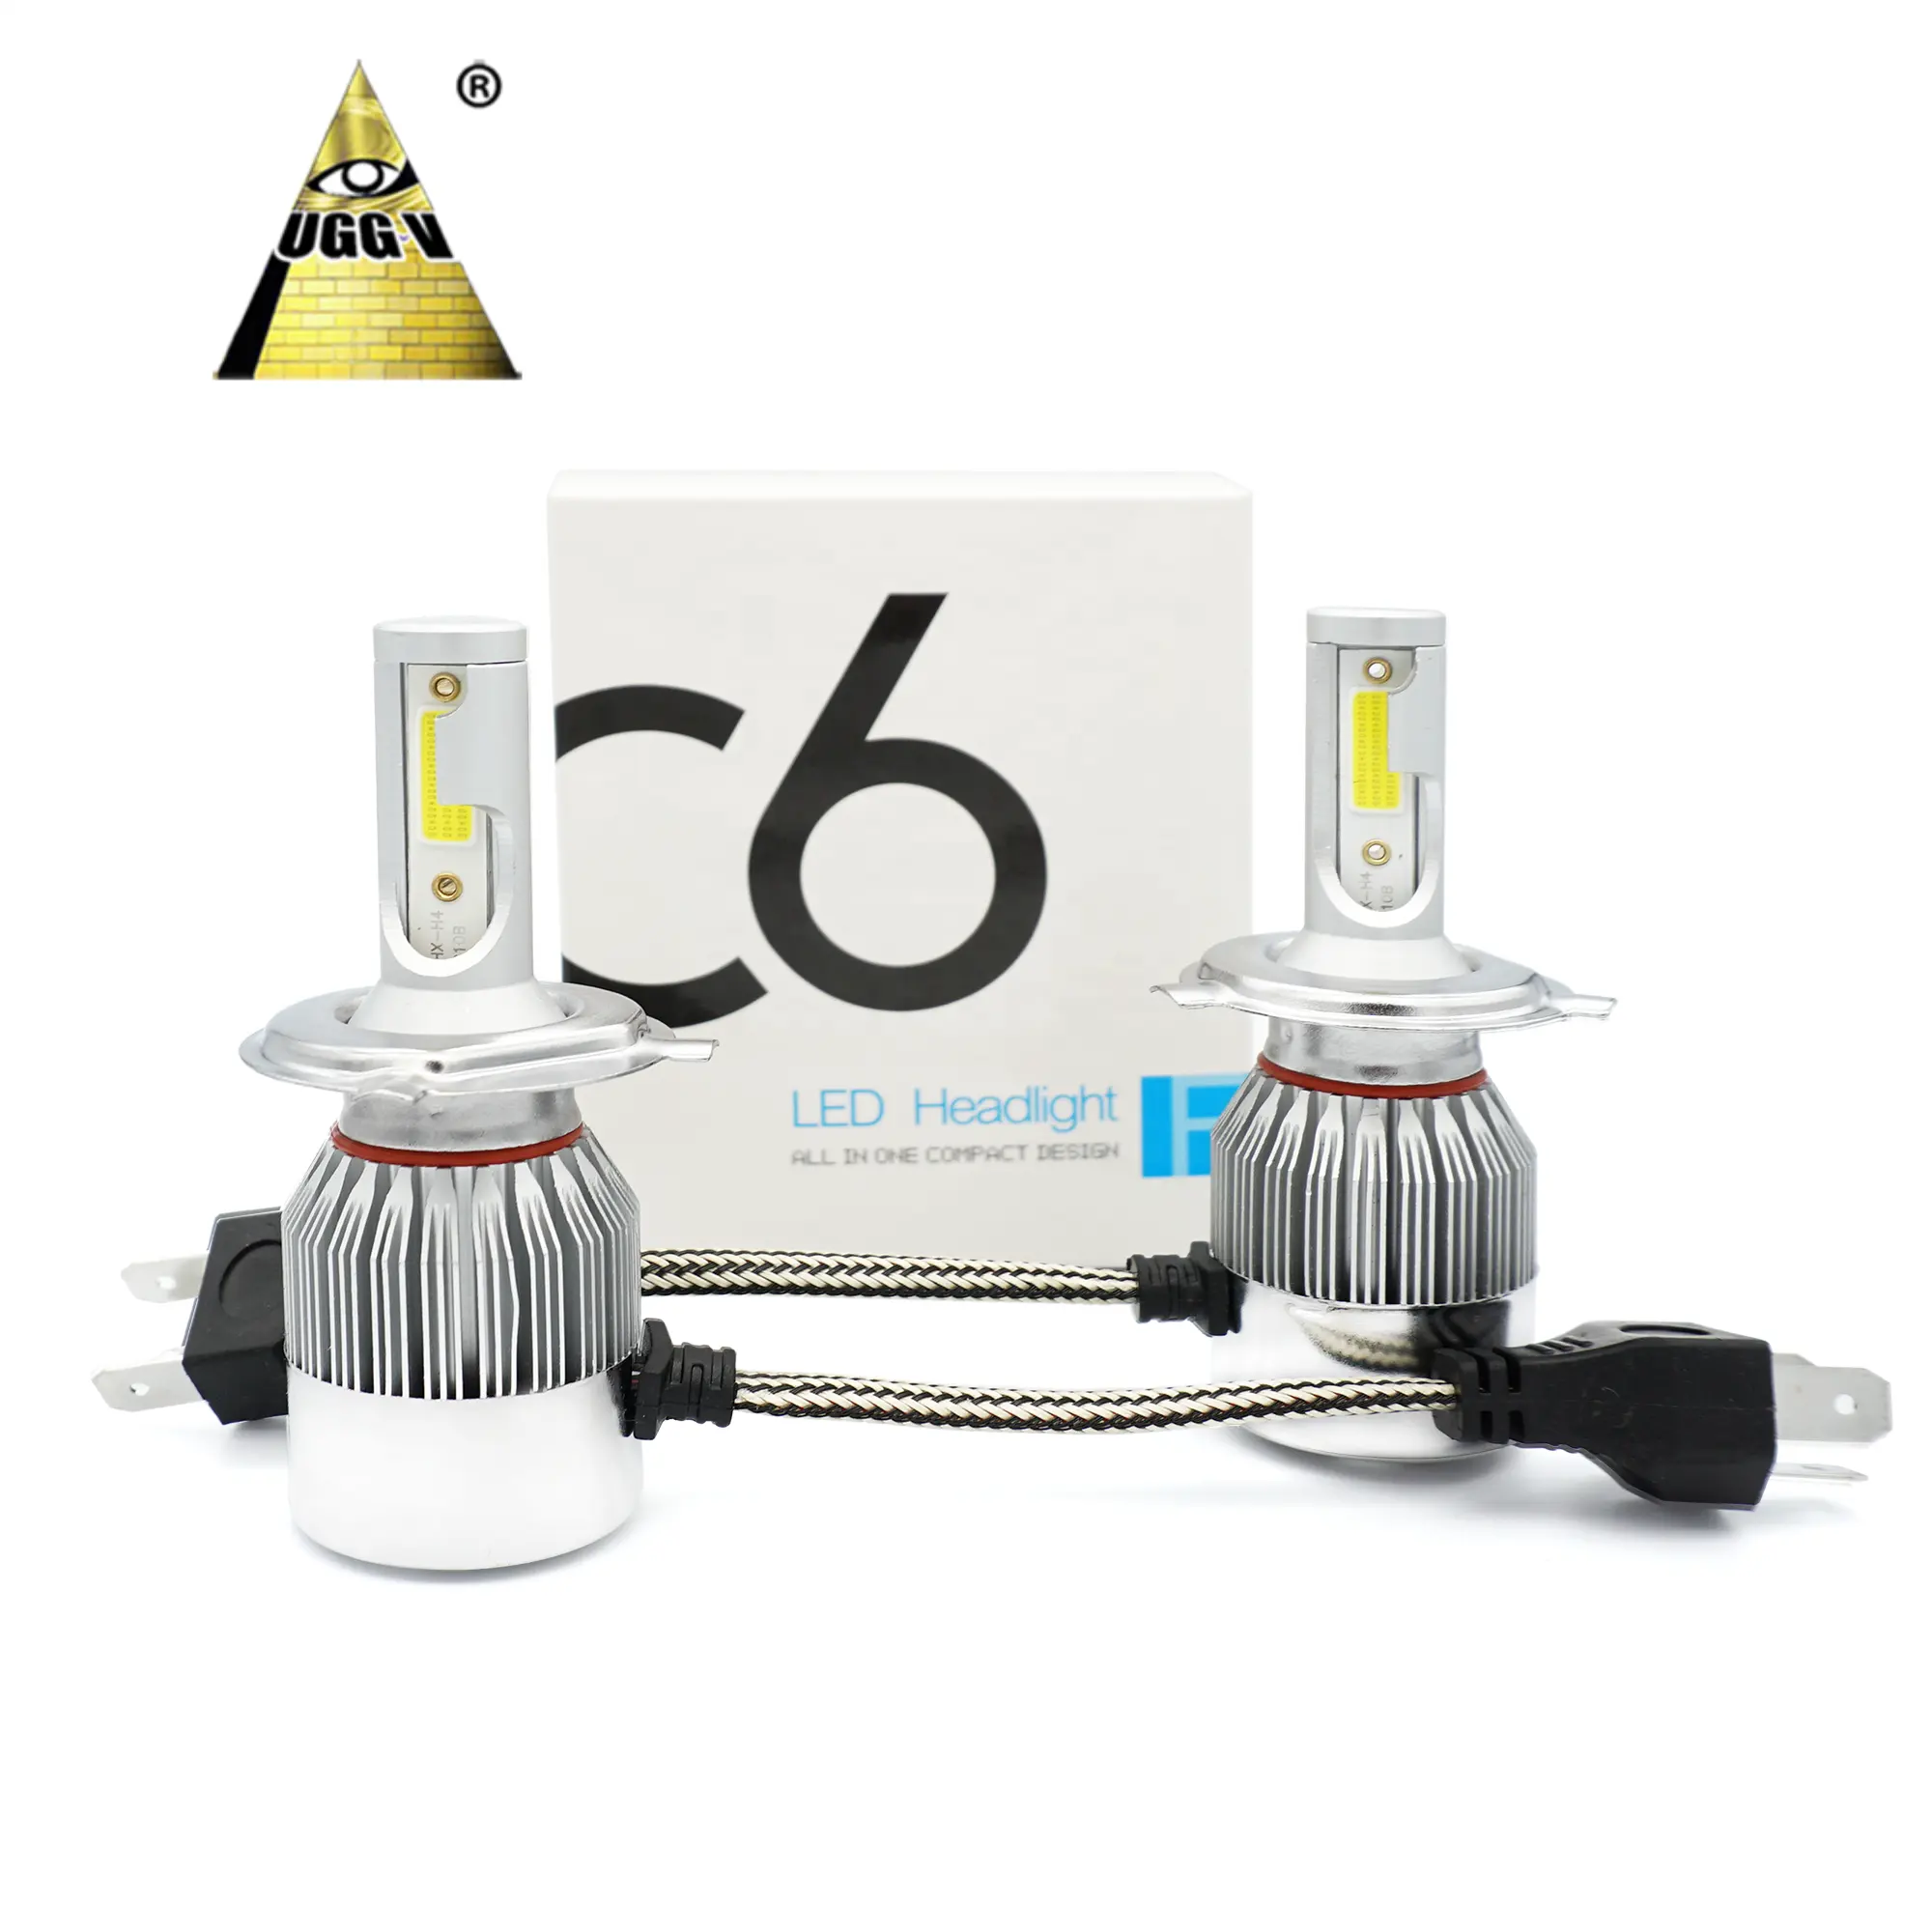 C6 H4 LED ไฟหน้าสําหรับรถยนต์ 72W 6000lm อลูมิเนียม IP65 กันน้ําใหม่สภาพรุ่น H3 H1 H11 H13 สําหรับรถทุกรุ่น